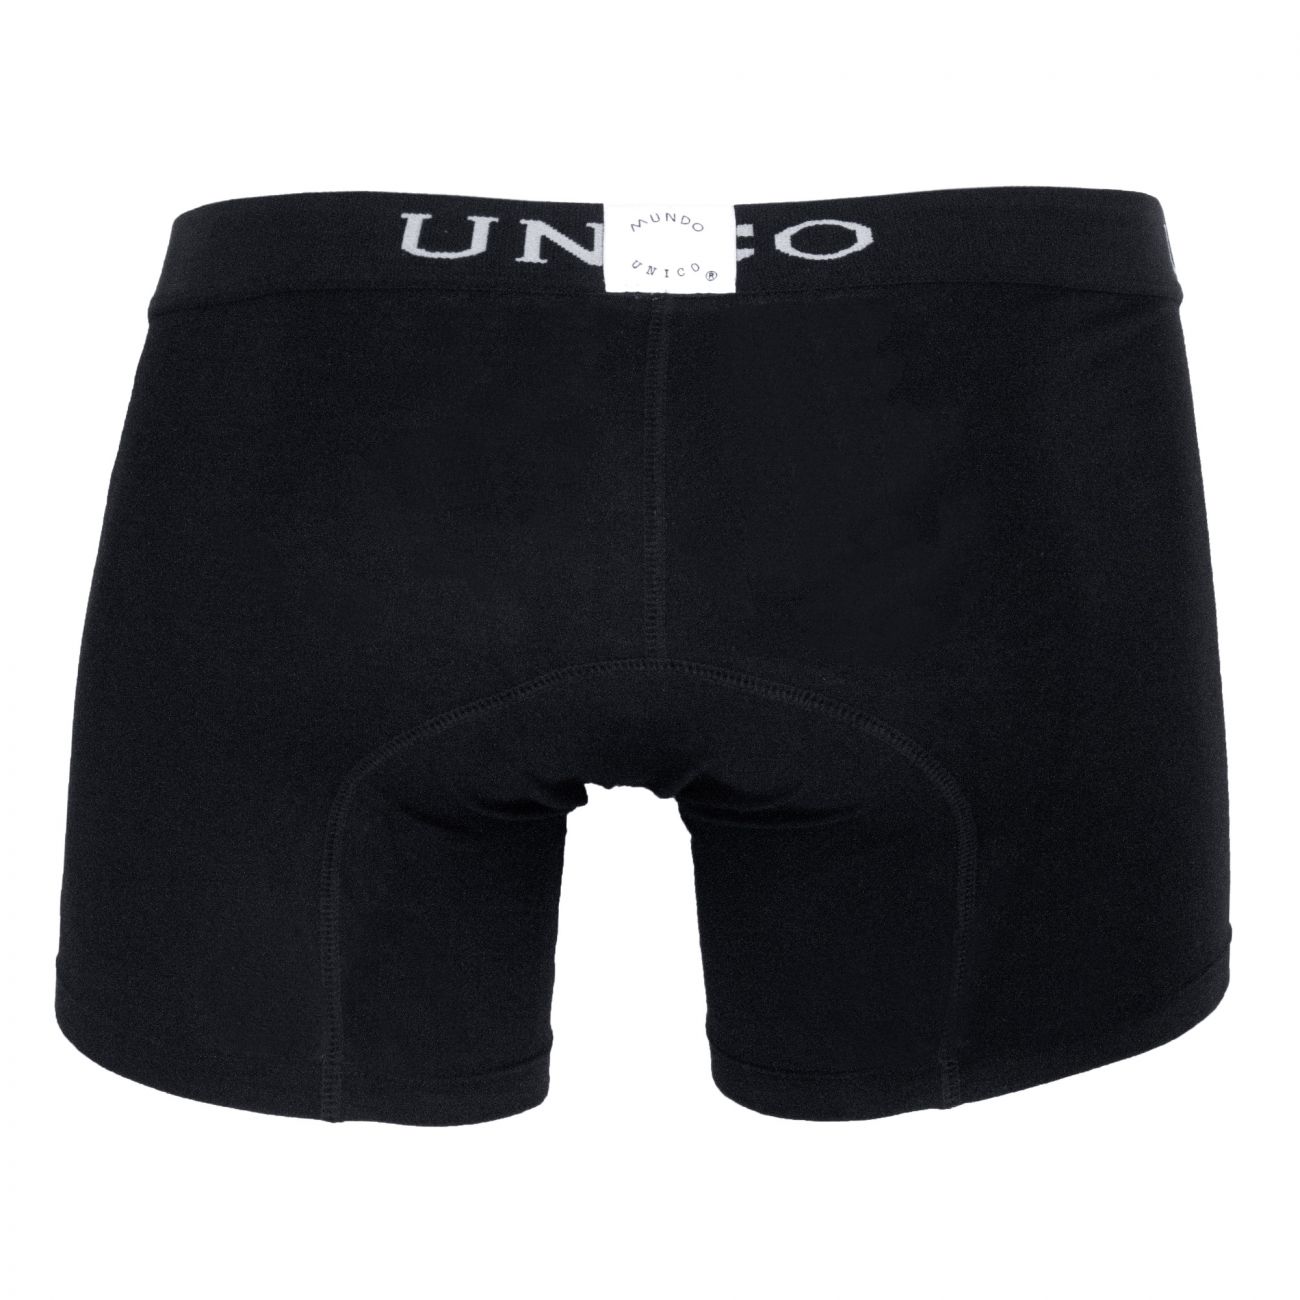 Mens Underwear: Unico 9610090199 Boxer Briefs Intenso | eBay